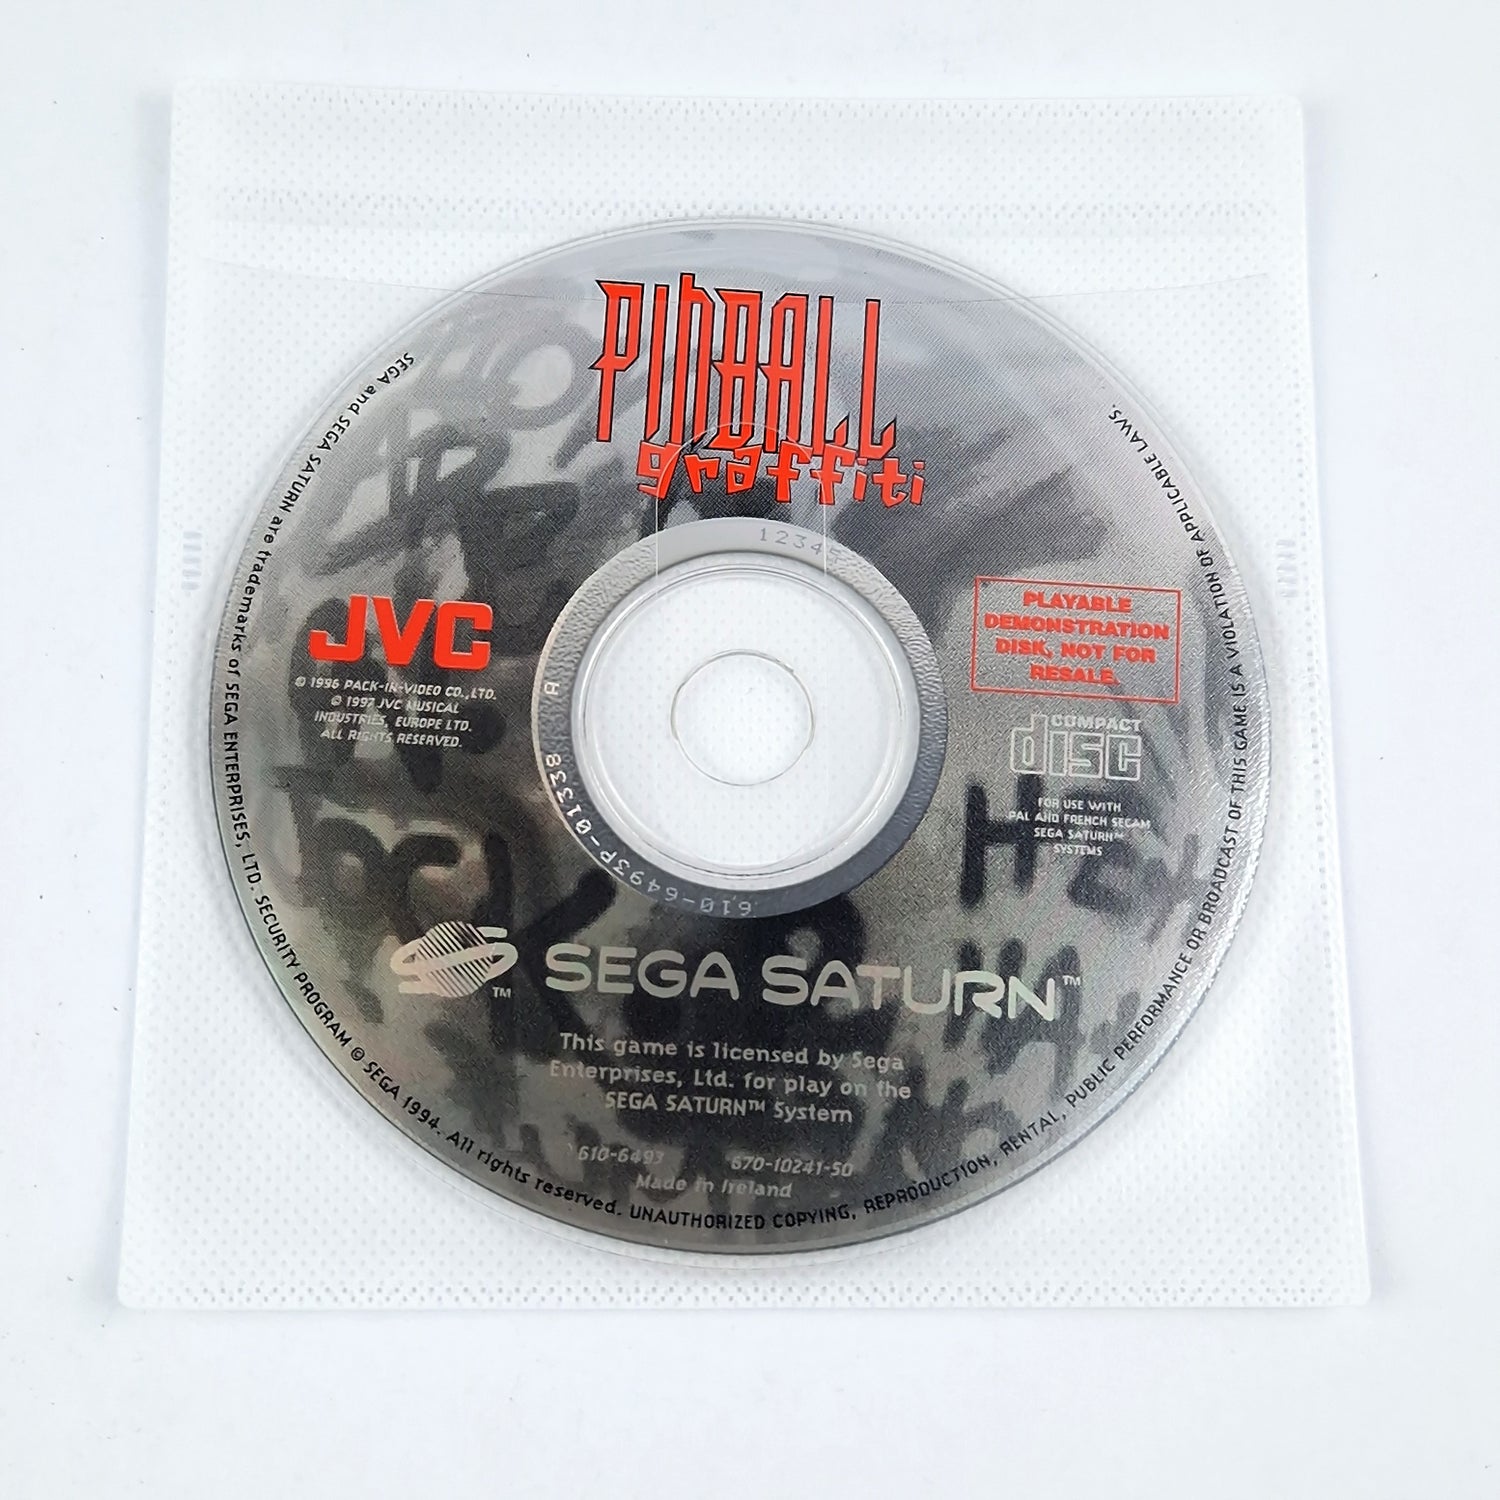 Sega Saturn Game : Pinball Graffiti - CD Only DEMO Version Disc